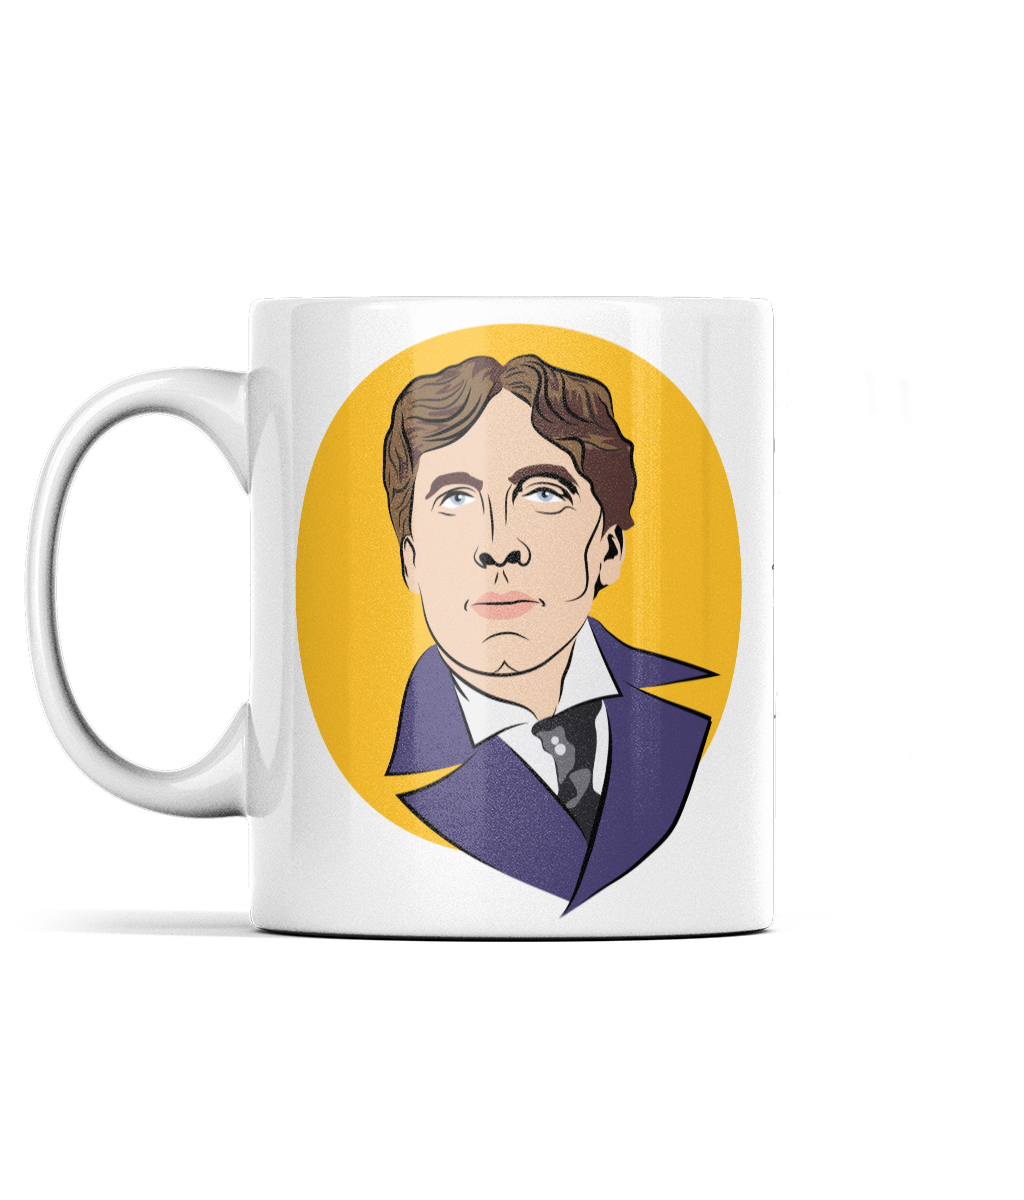 Oscar Wilde mug